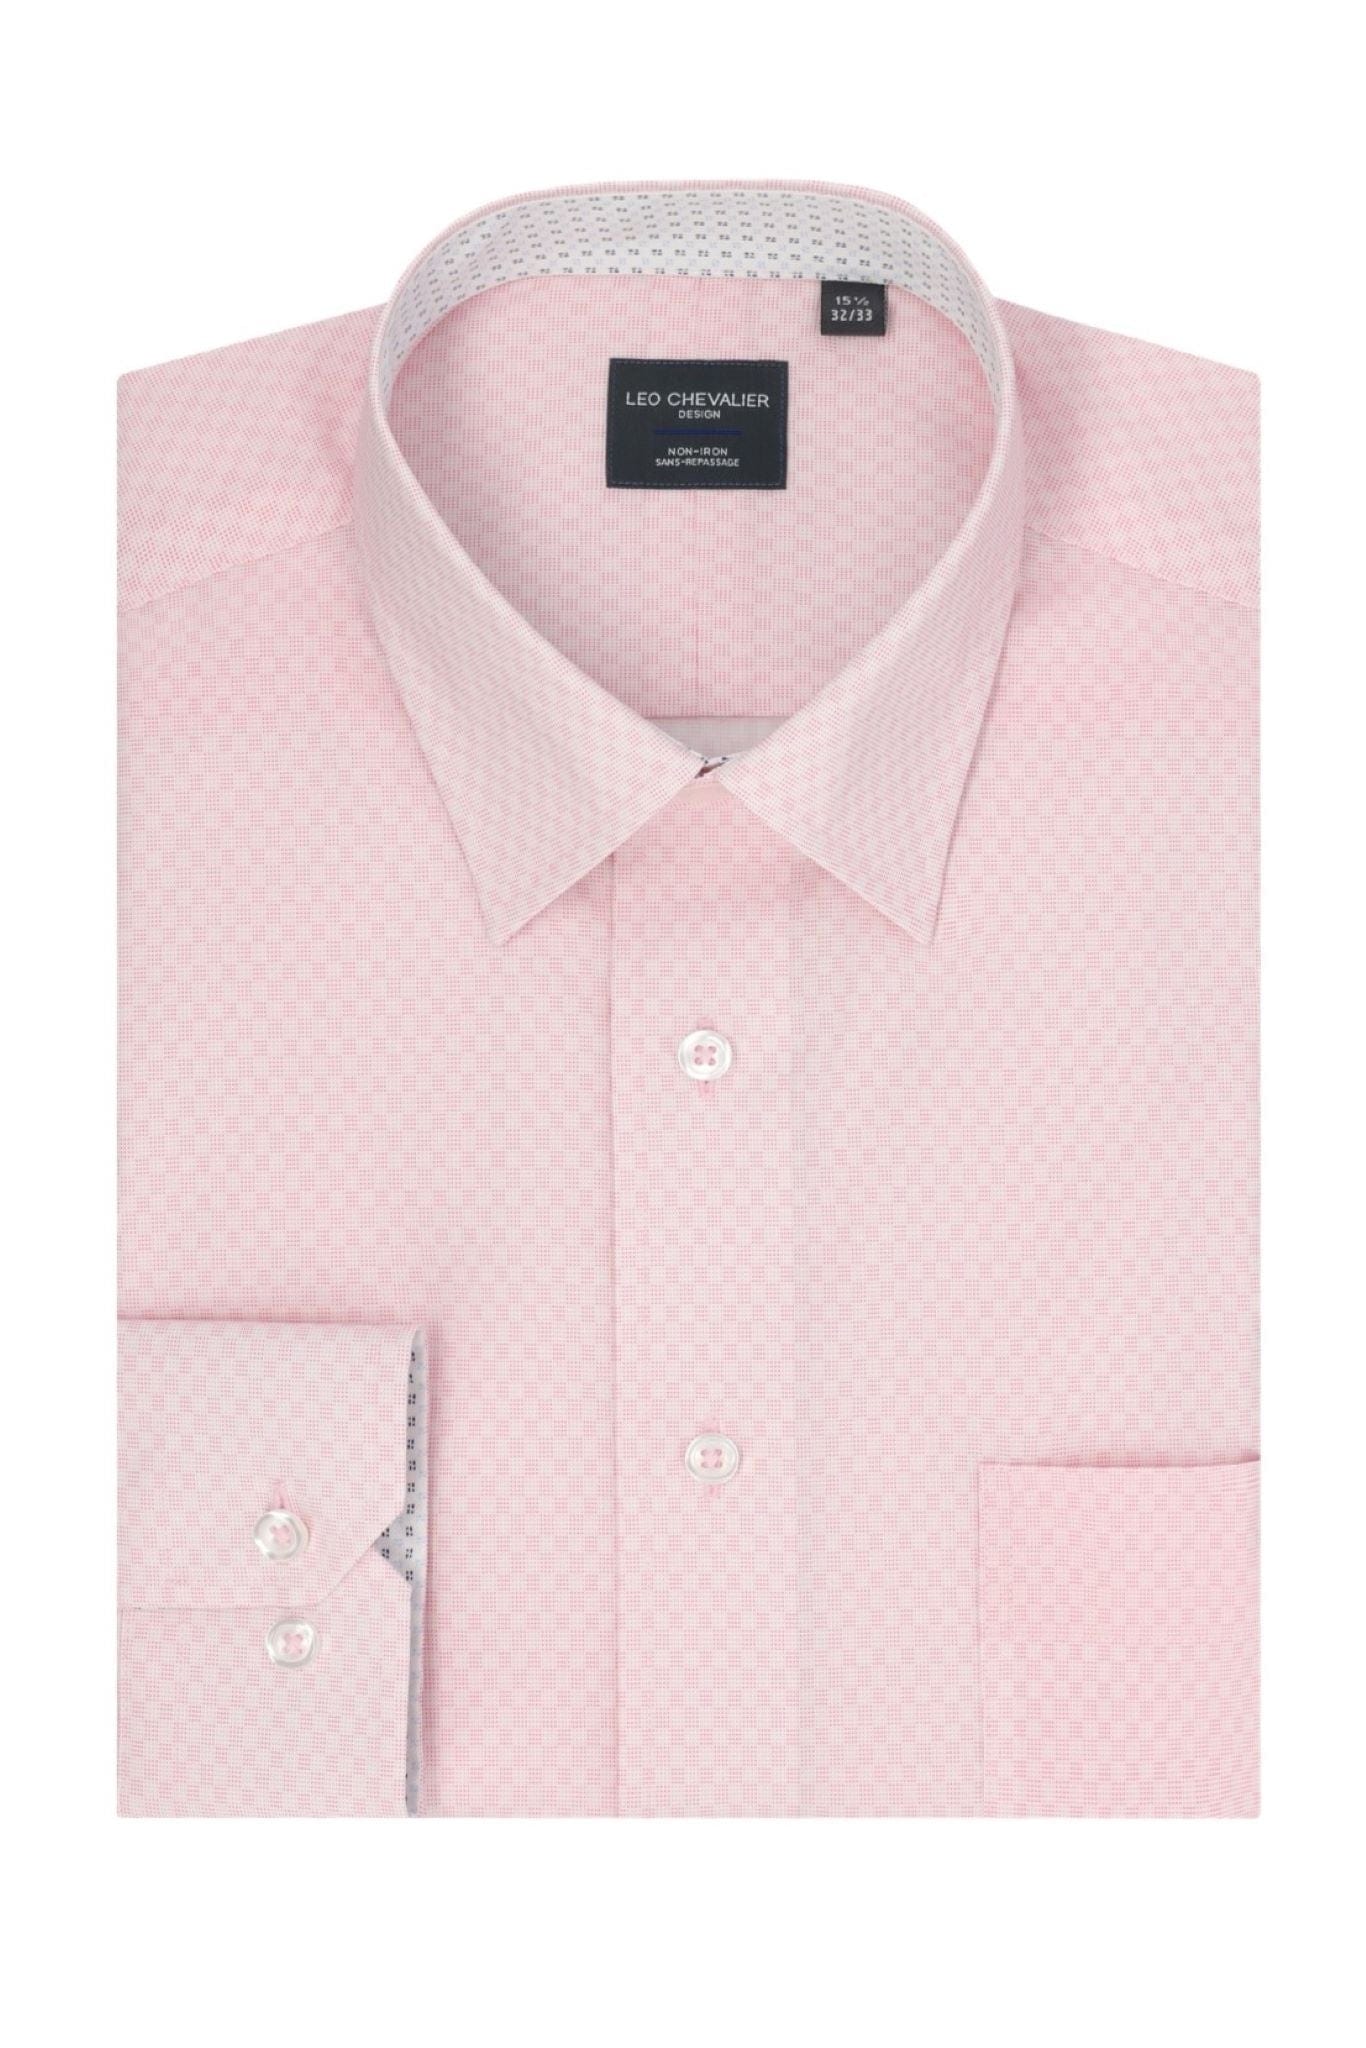 Leo Chevalier Design Pink 100% Cotton Non-Iron Long Sleeve Dress Shirts